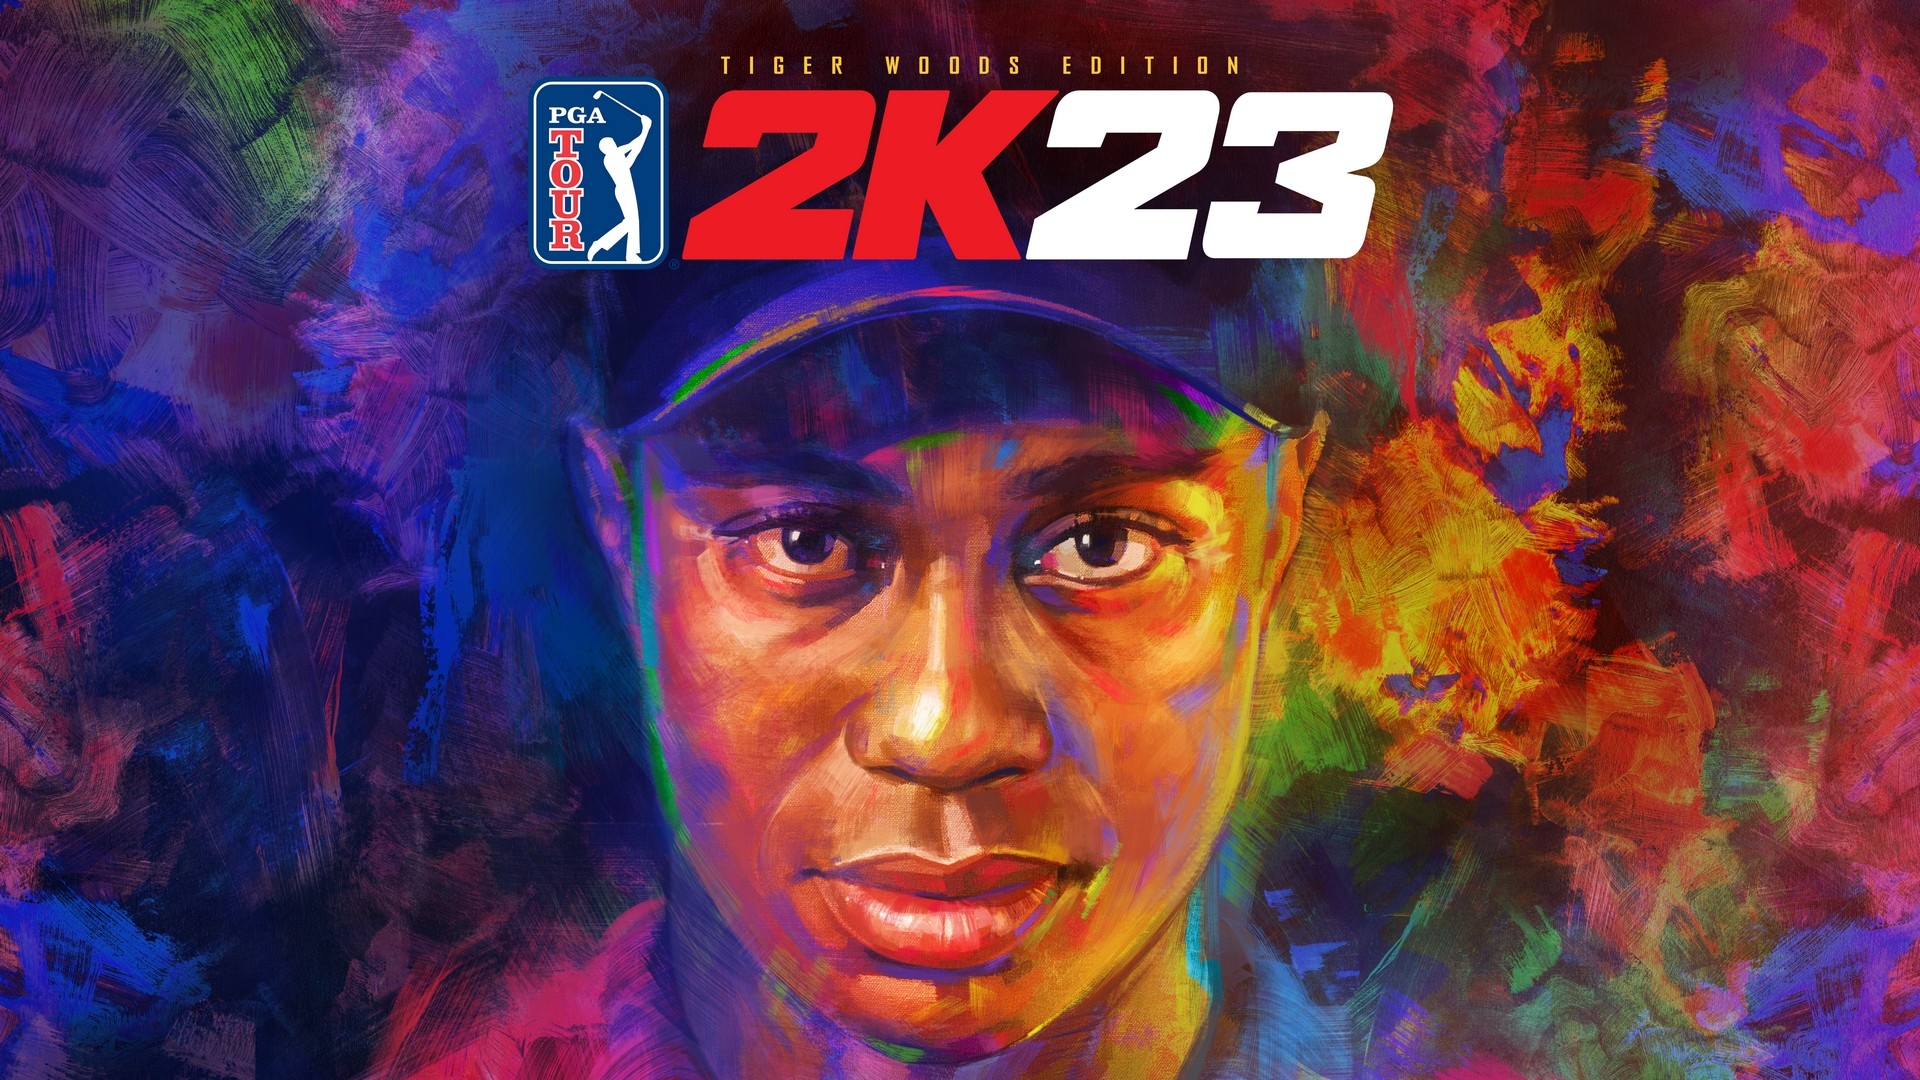 Series Tour ONE Reviews X|S) Tiger Edition / PGA Xbox 2K23 (Xbox Woods